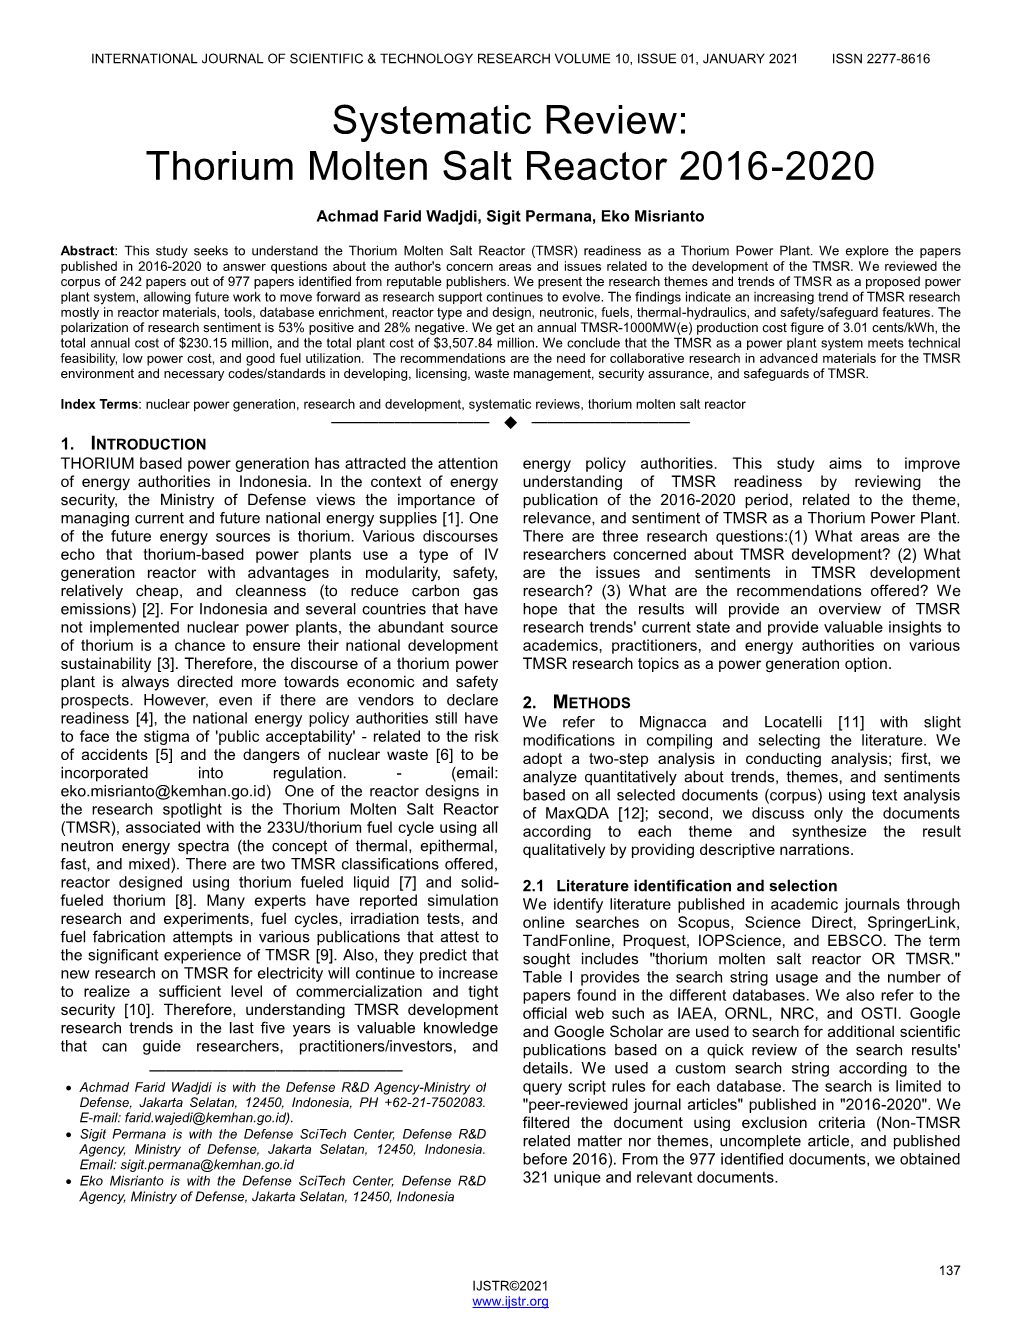 Systematic Review: Thorium Molten Salt Reactor 2016-2020